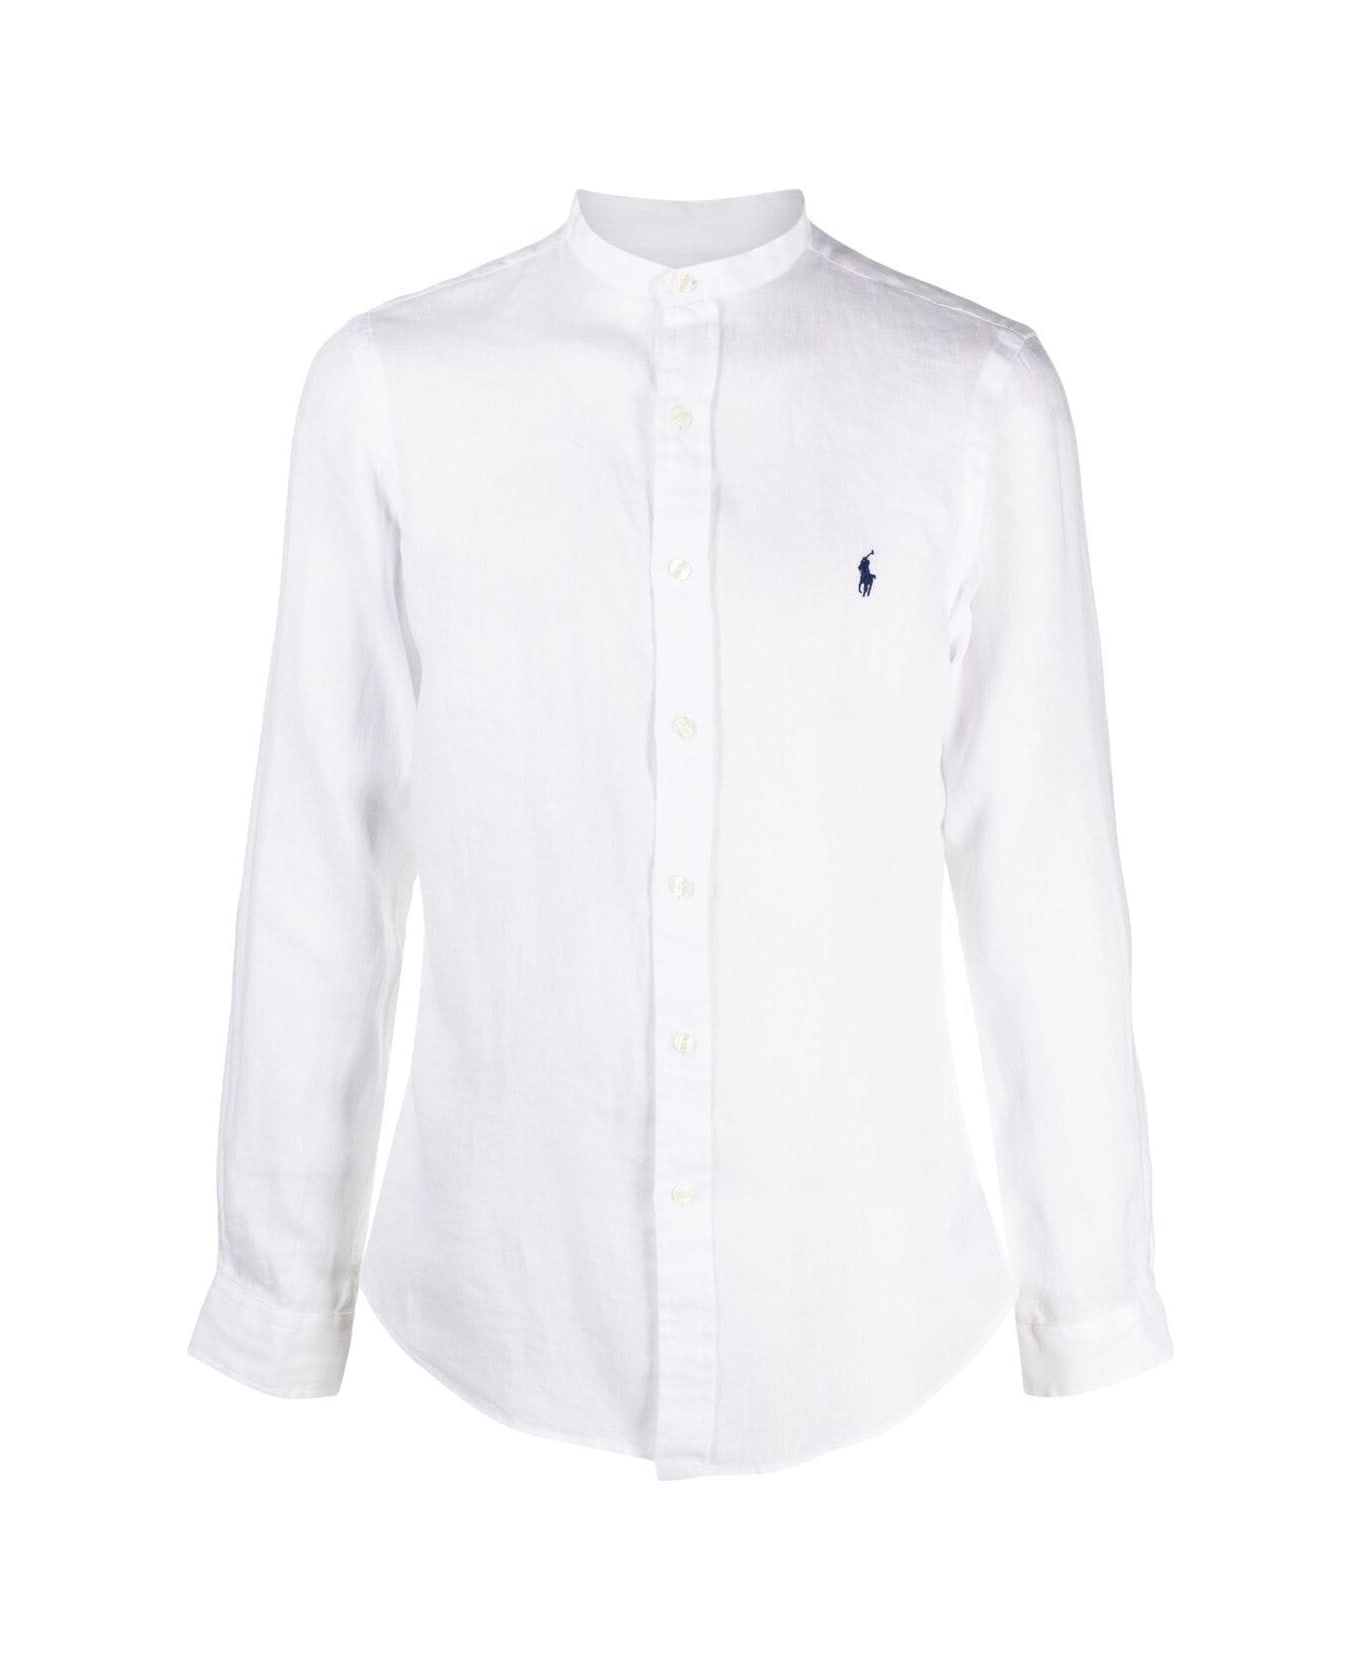 Ralph Lauren White Linen Shirt With Logo - White